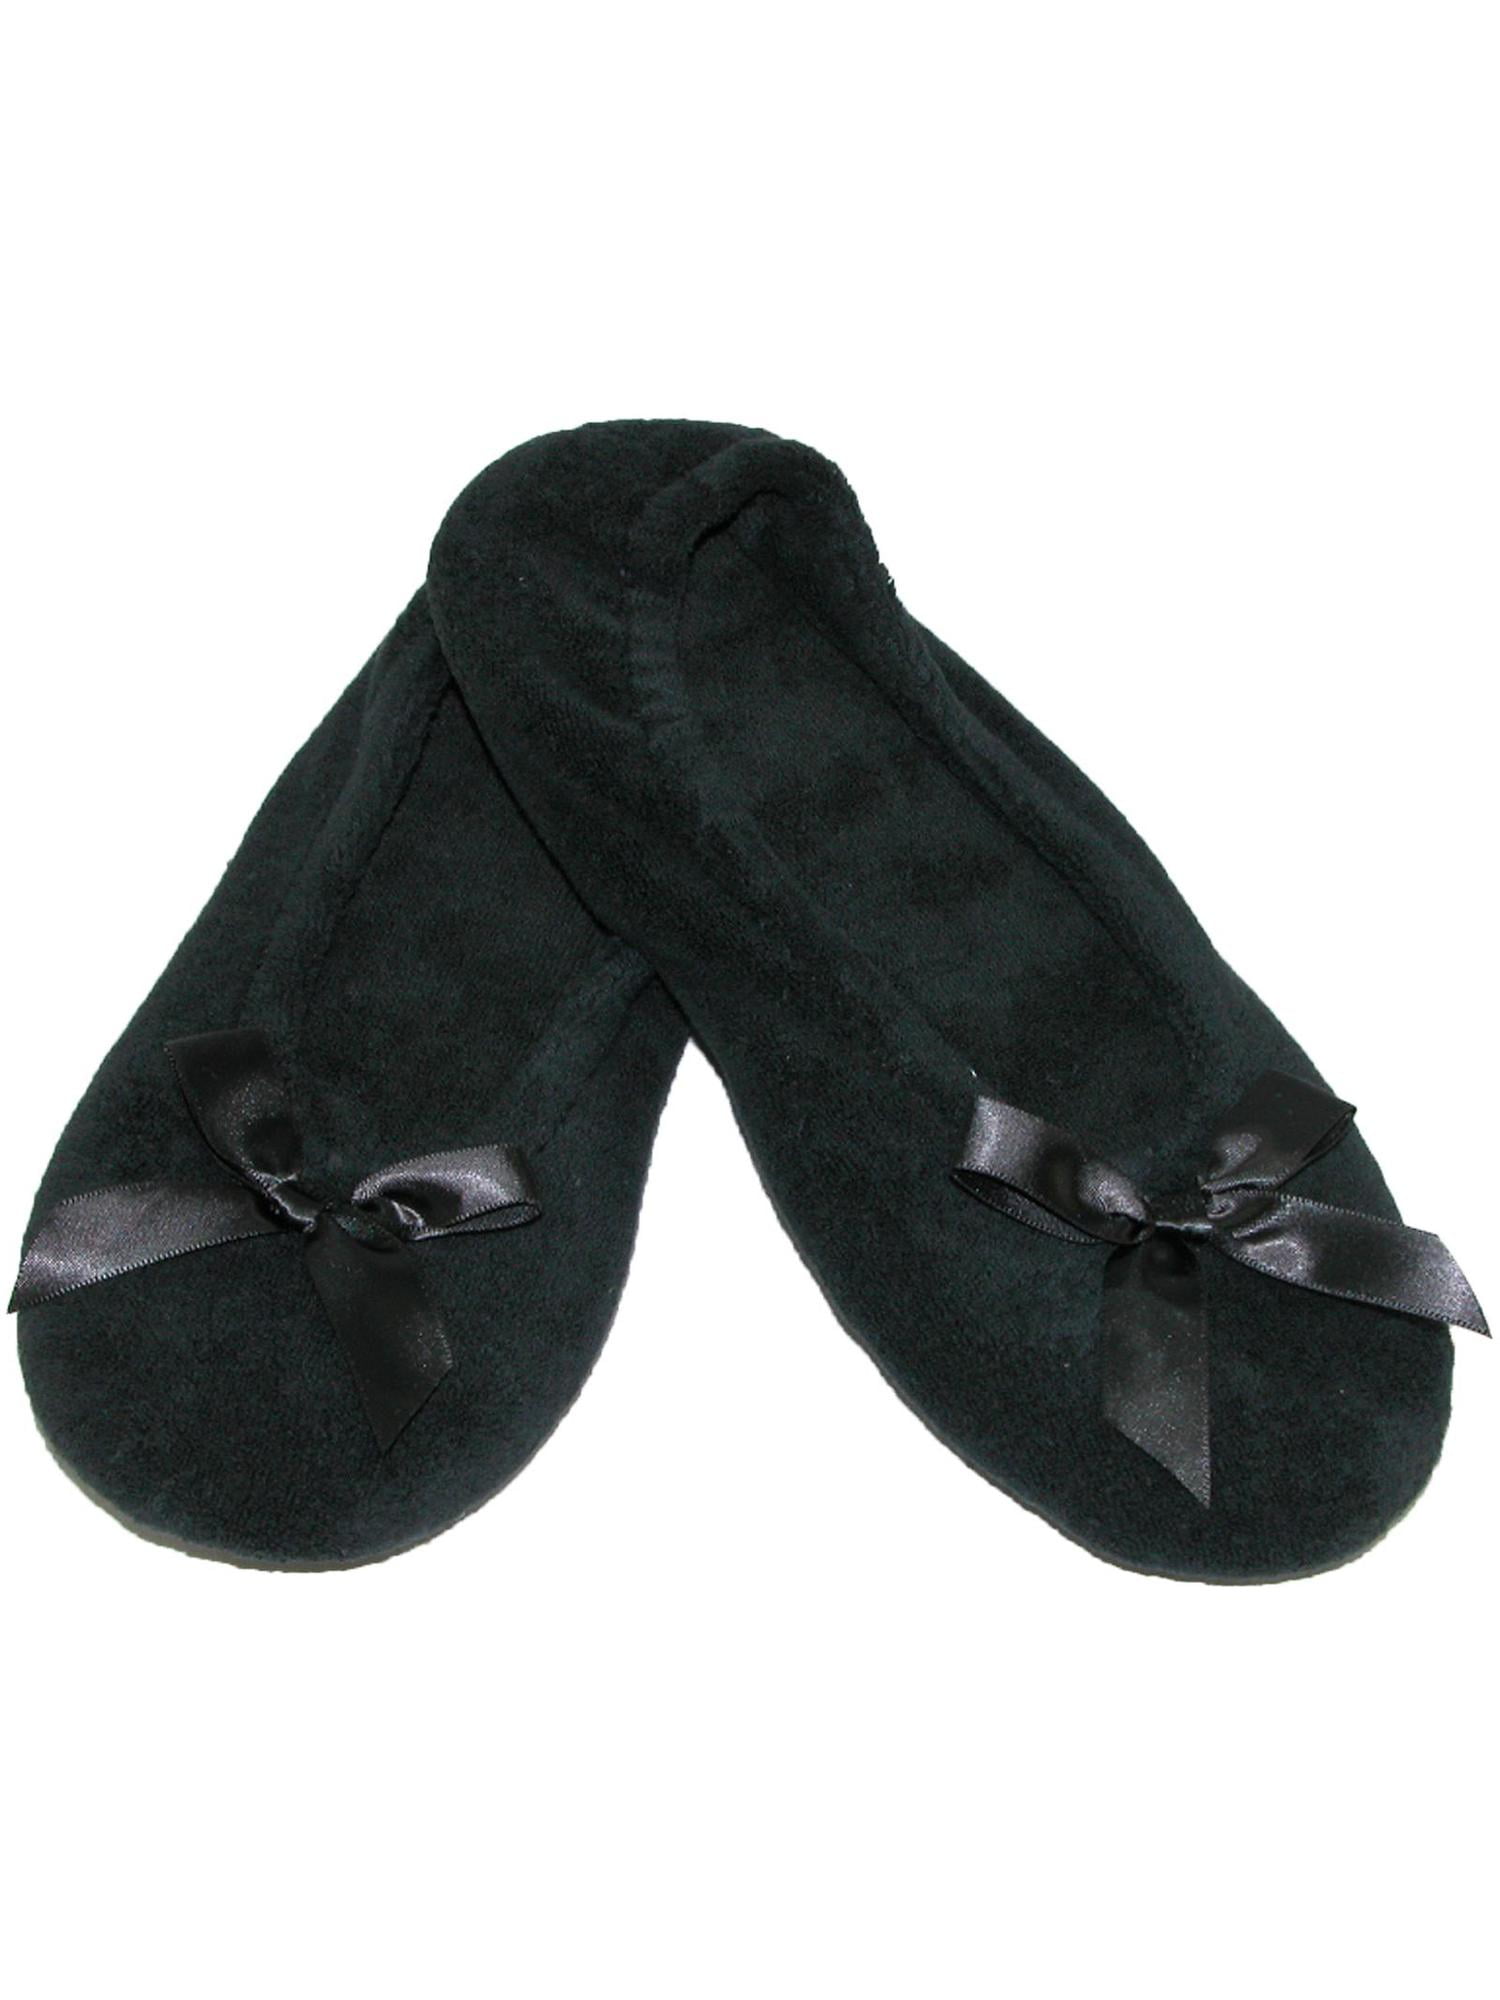 terry ballerina slippers